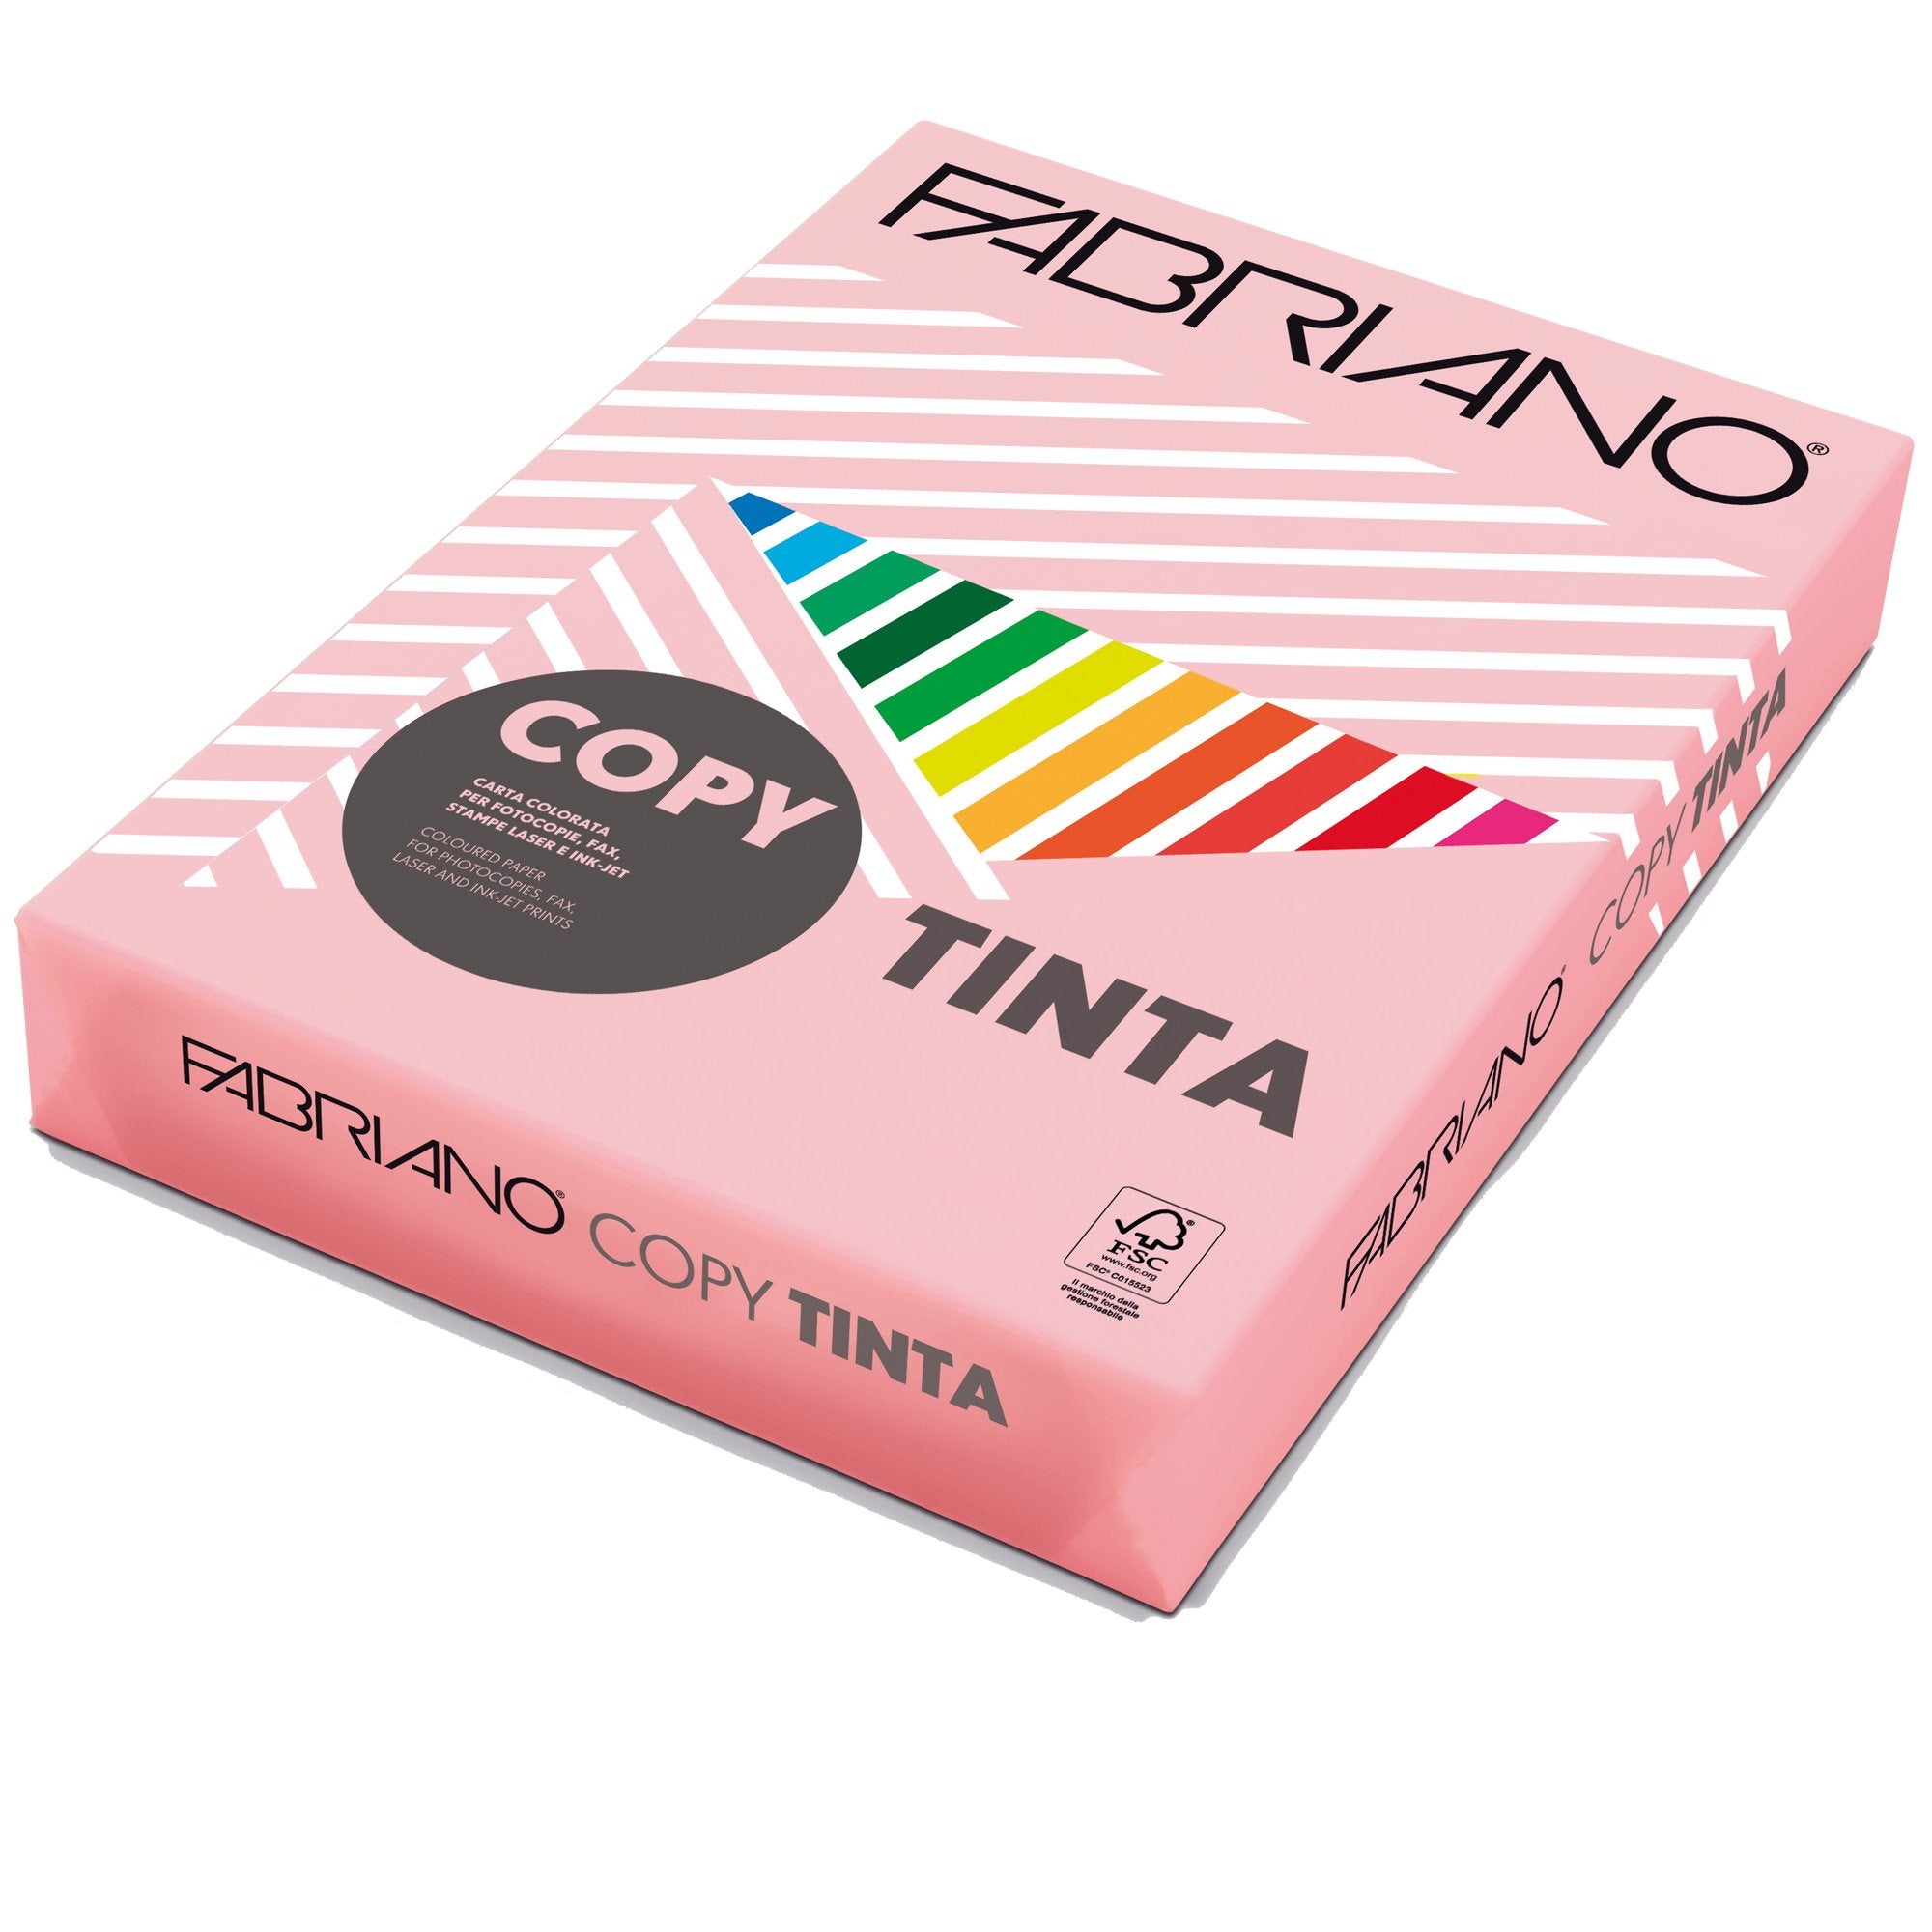 fabriano-carta-copy-tinta-a4-80gr-500fg-col-tenue-rosa